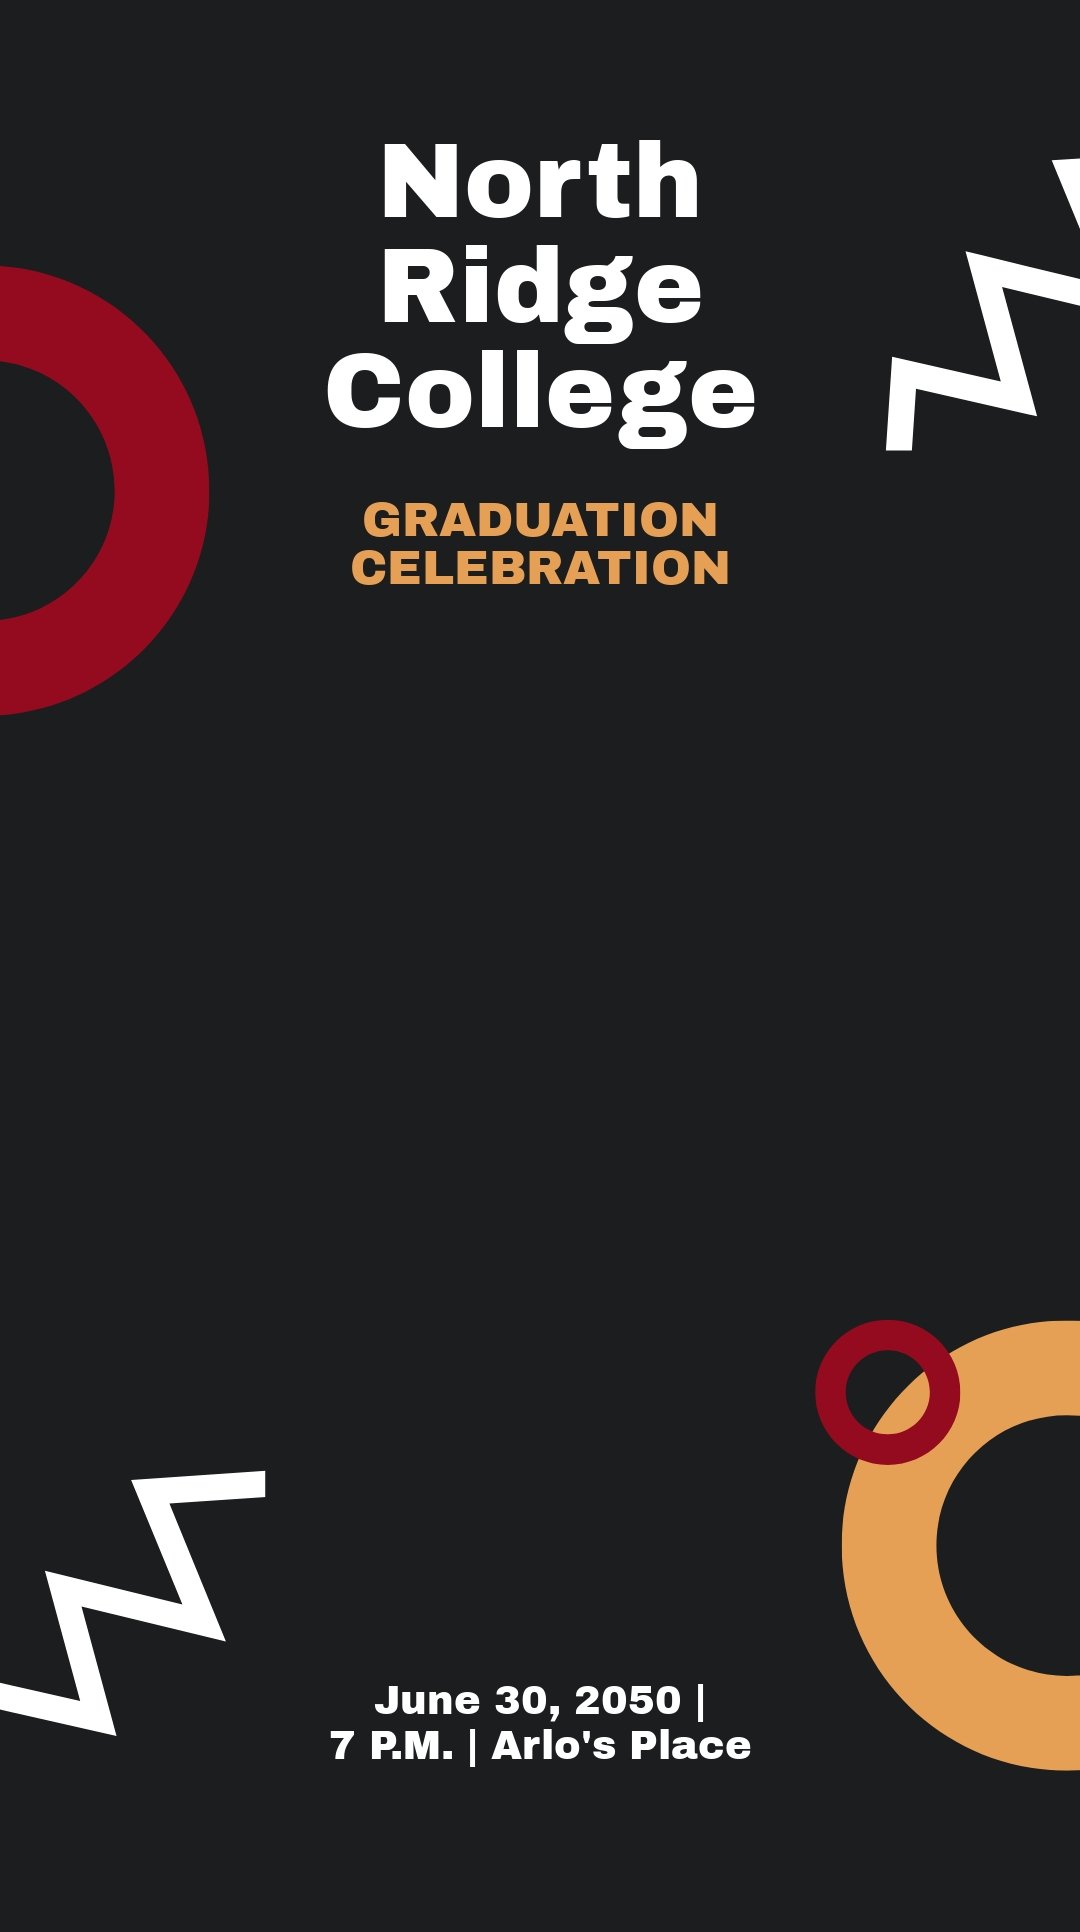 Graduation Celebration Snapchat Geofilter Template